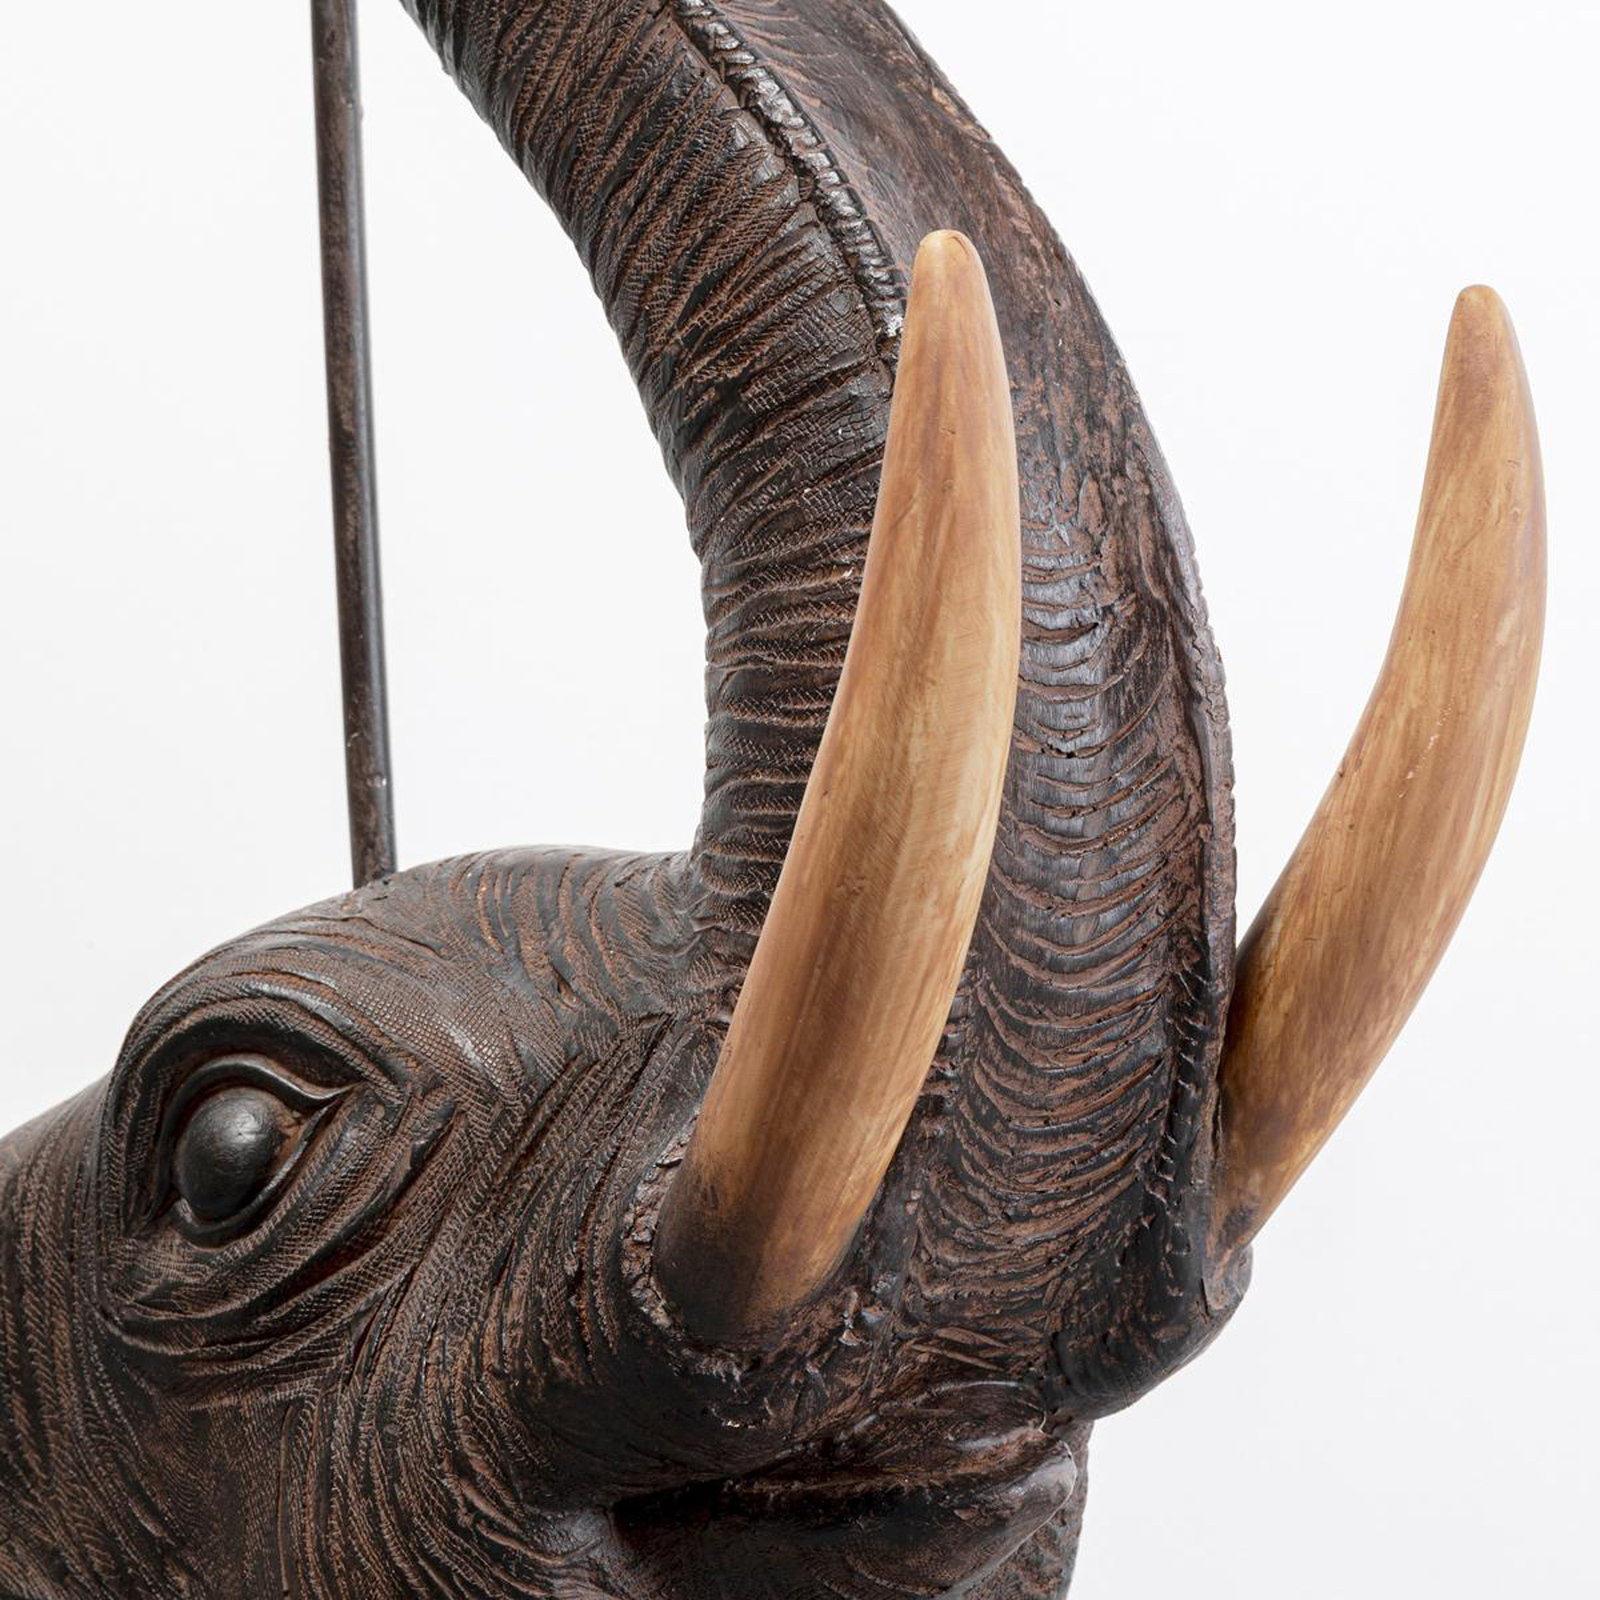 KARE Stehlampe Animal Elephant, braun, Leinen natur, 154 cm